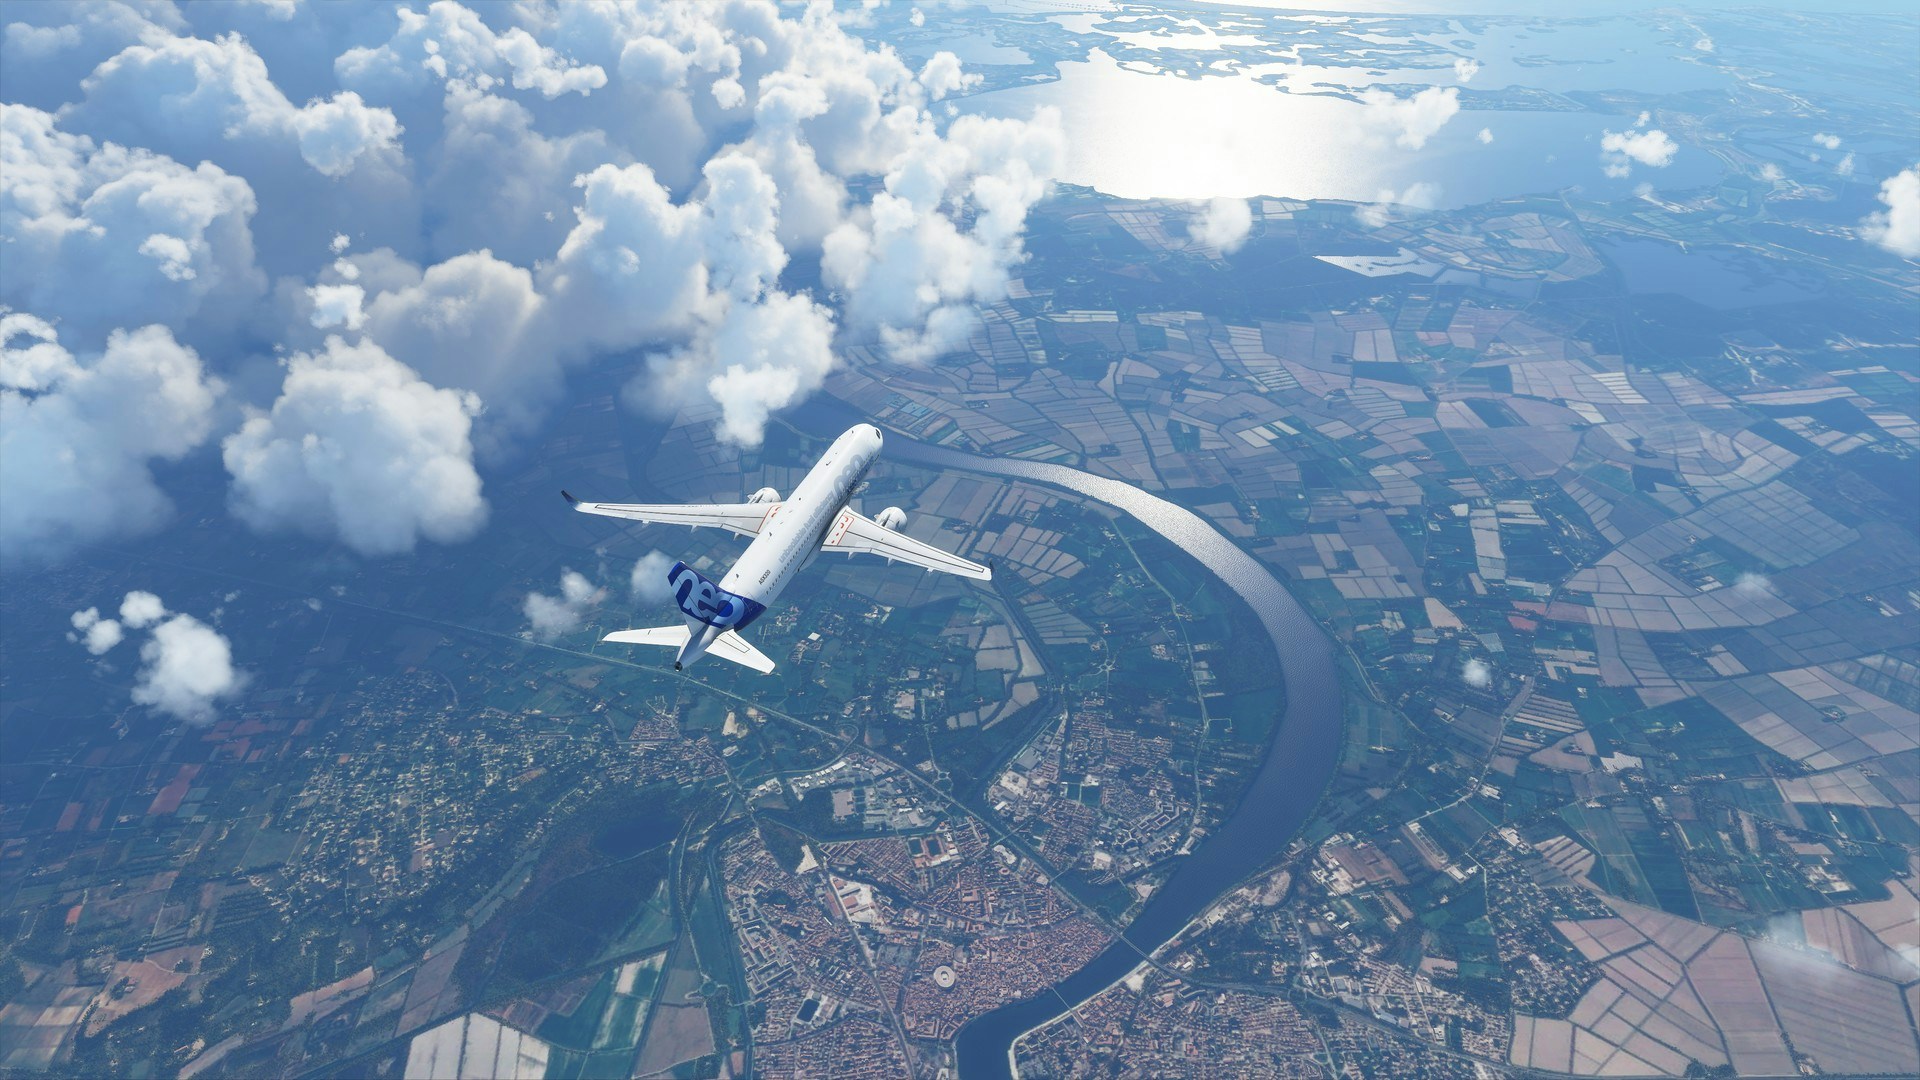 What's On Steam - Microsoft Flight Simulator